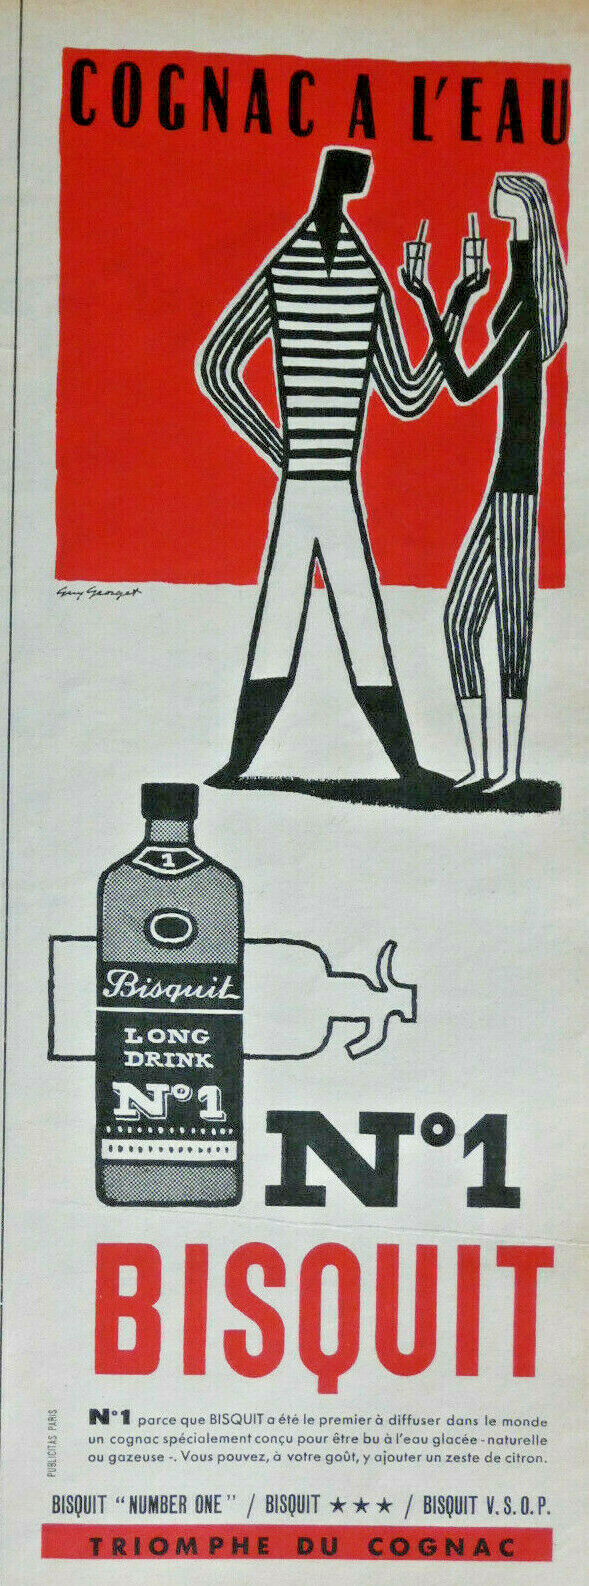 1957 WATER COGNAC LONG DRINK PRESS ADVERTISEMENT - GUY GEORGET